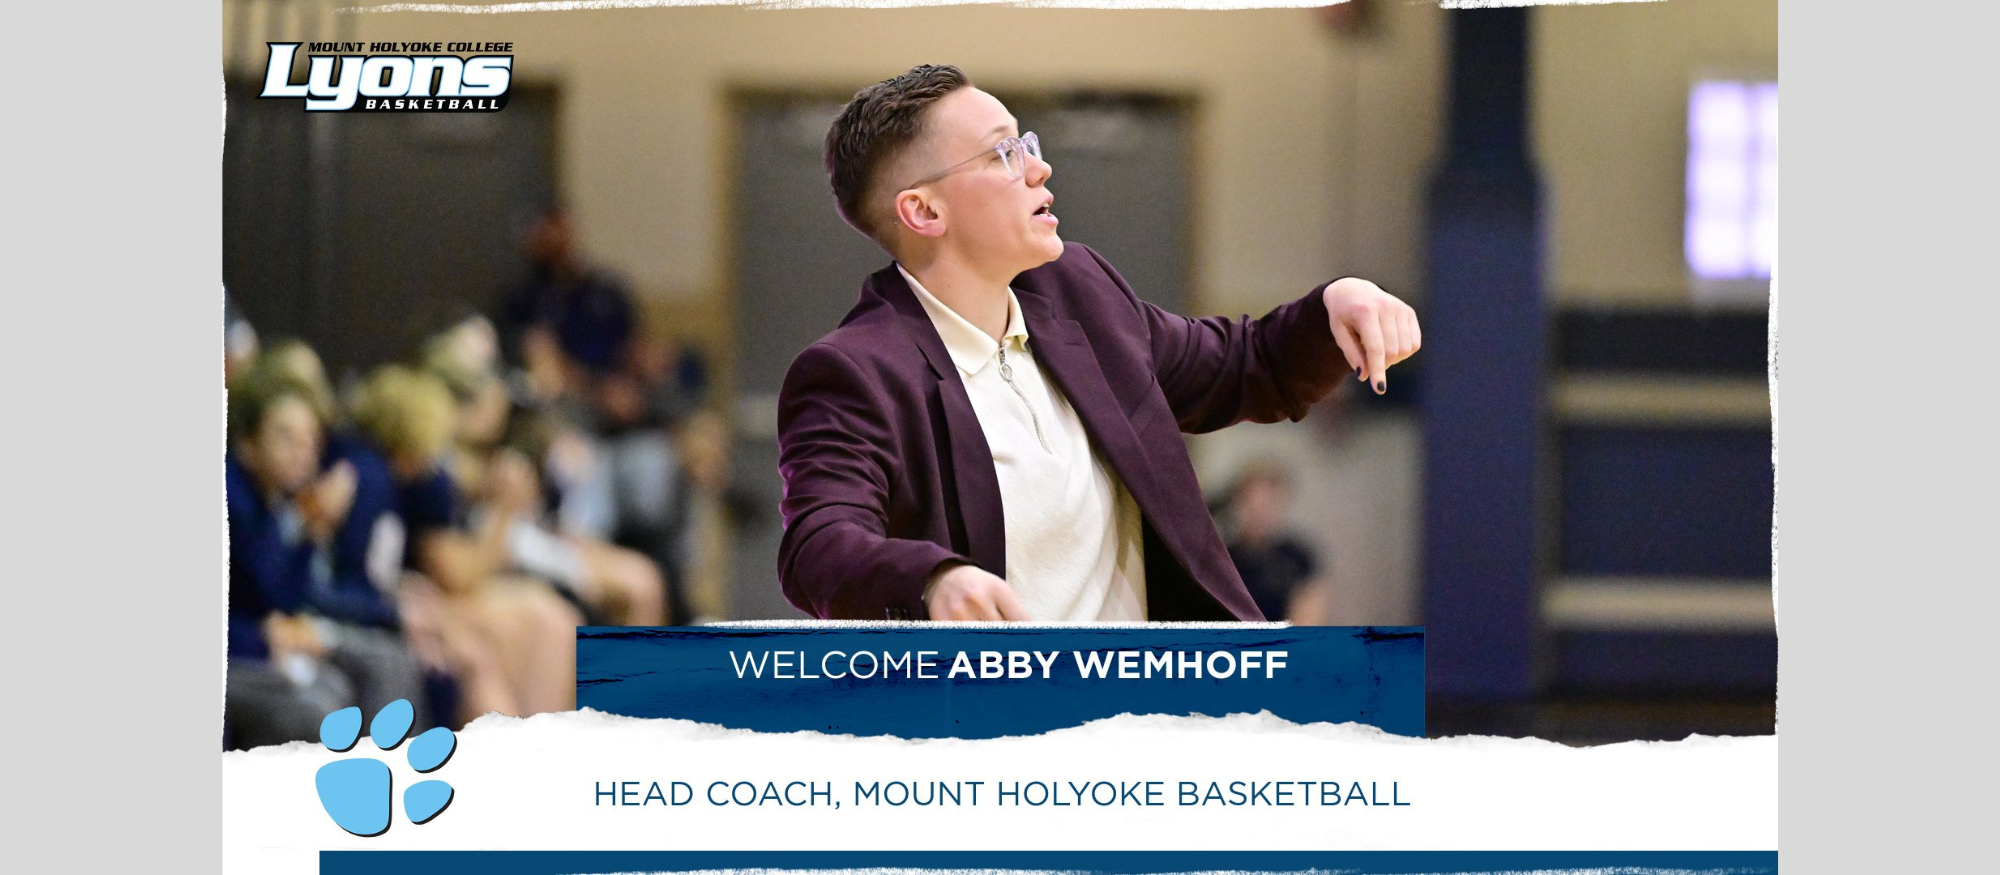 Abby Wemhoff named head coach of Mount Holyoke basketball team